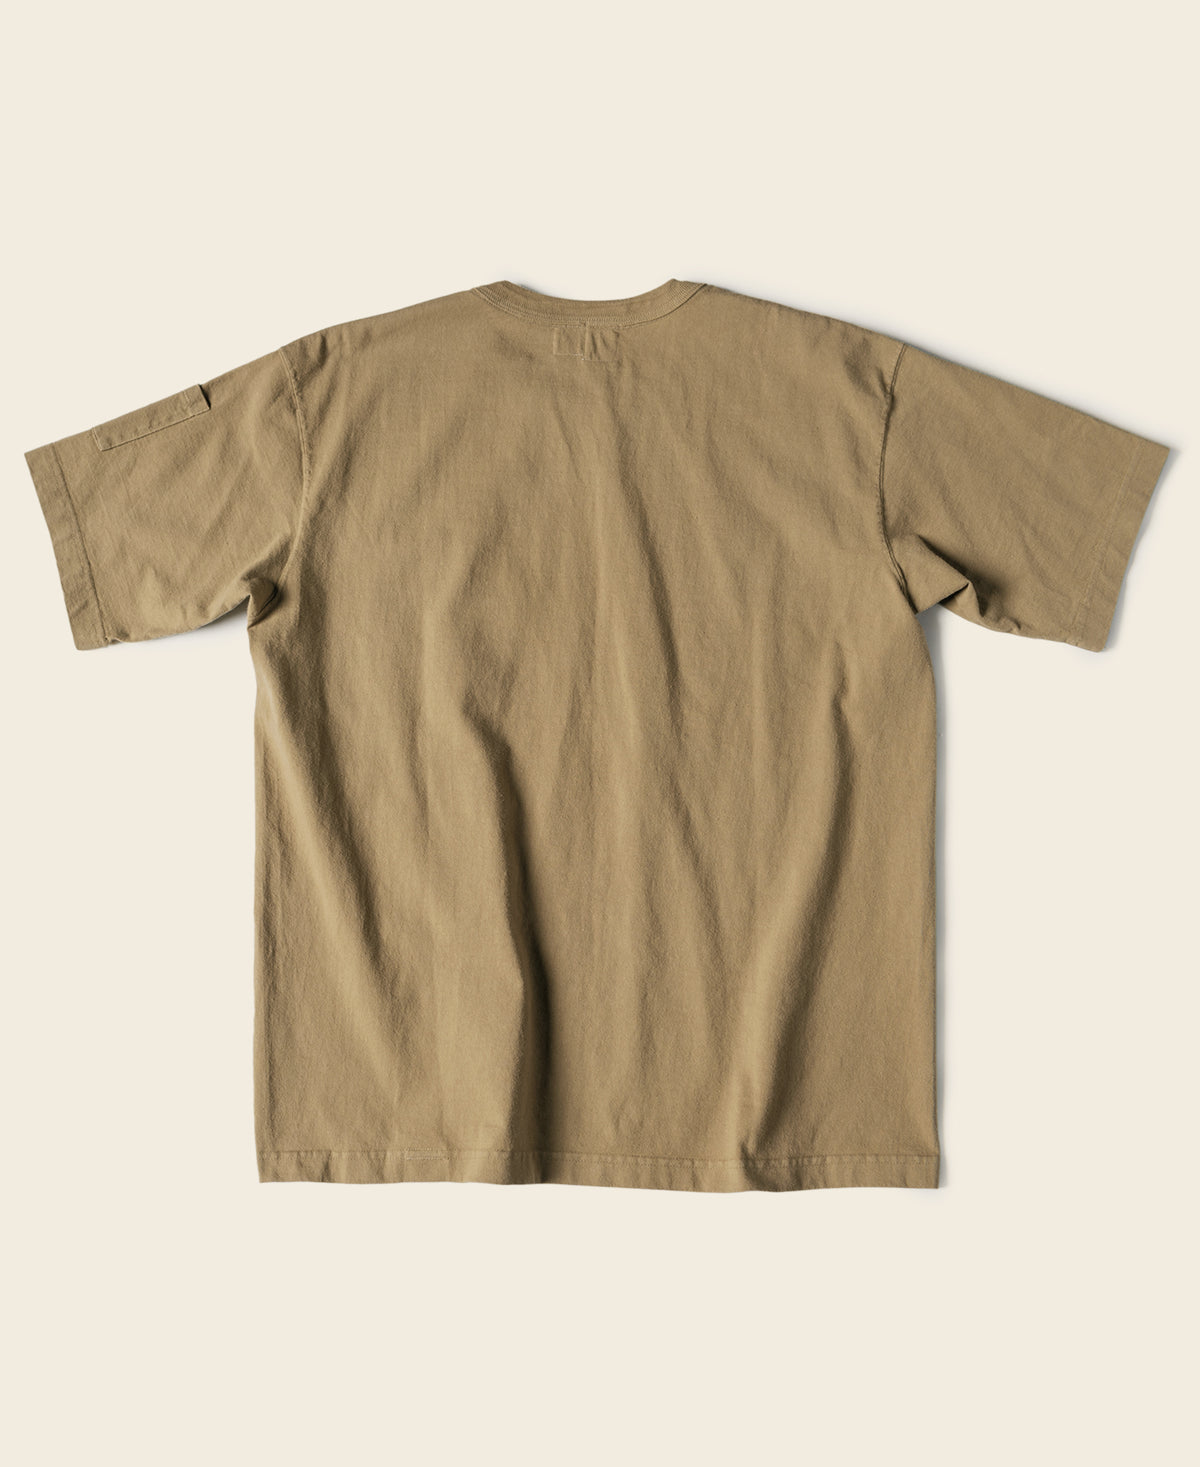 Slanted Pocket High Twist Cotton Tubular T-Shirt - Khaki